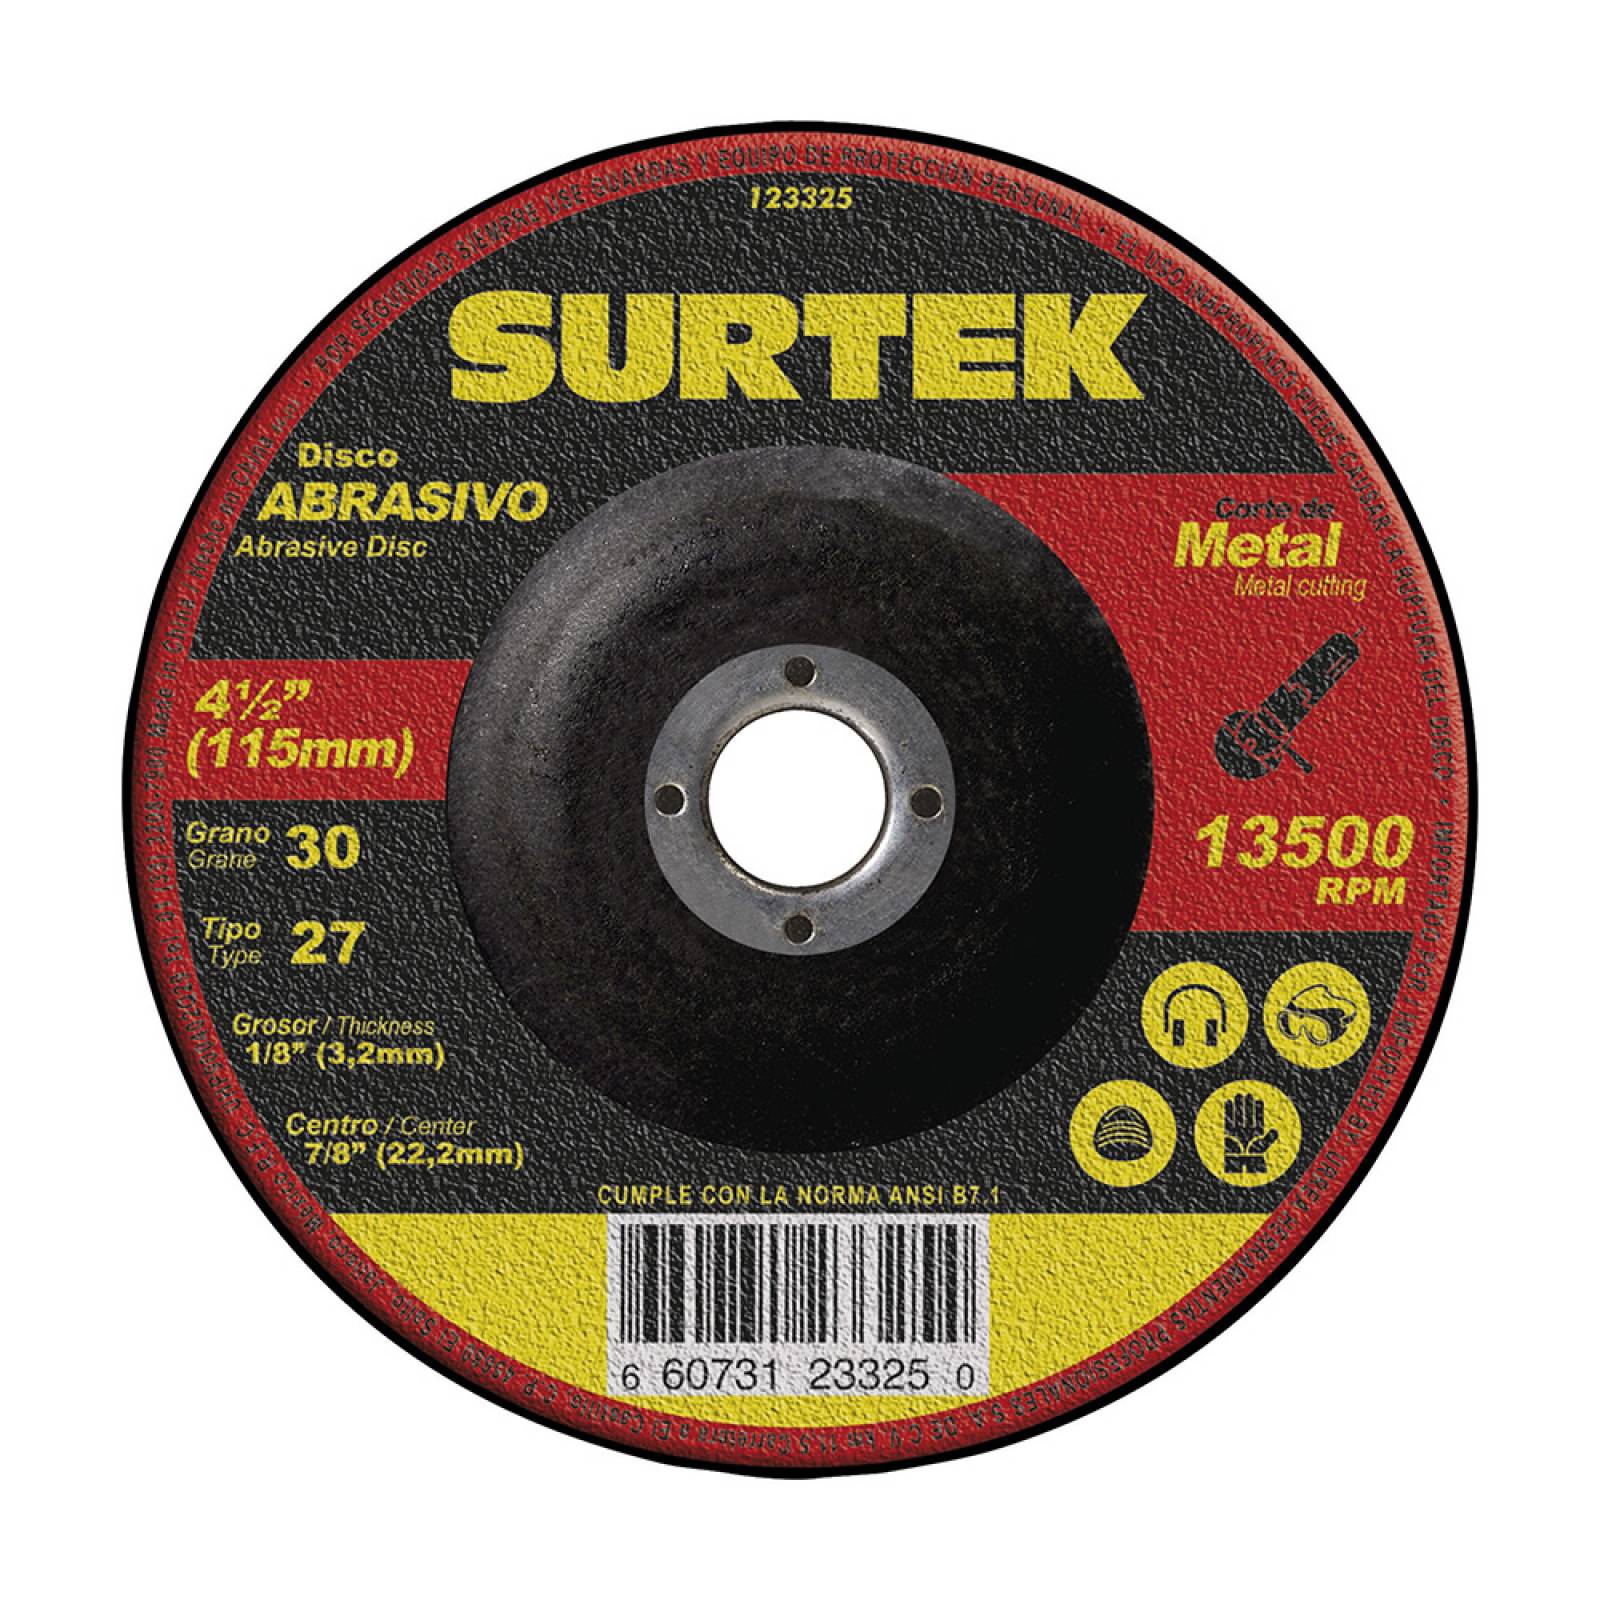 Disco T/27 Metal 4 1/2 X 1/8 Pulgadas 123325 Surtek 